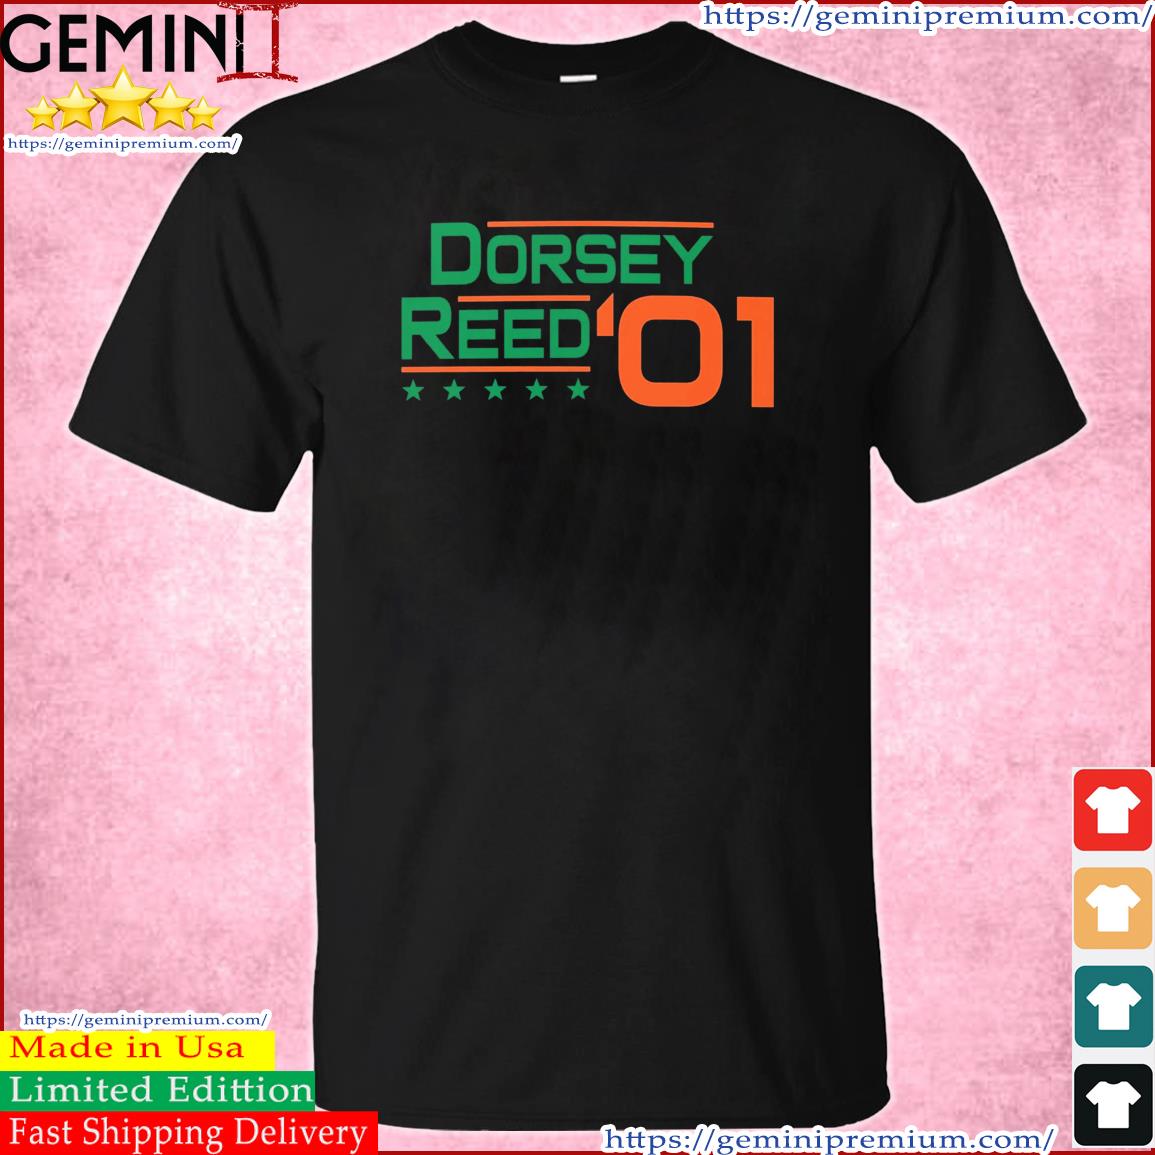 Miami Hurricanes Dorsey Reed '01 Shirt